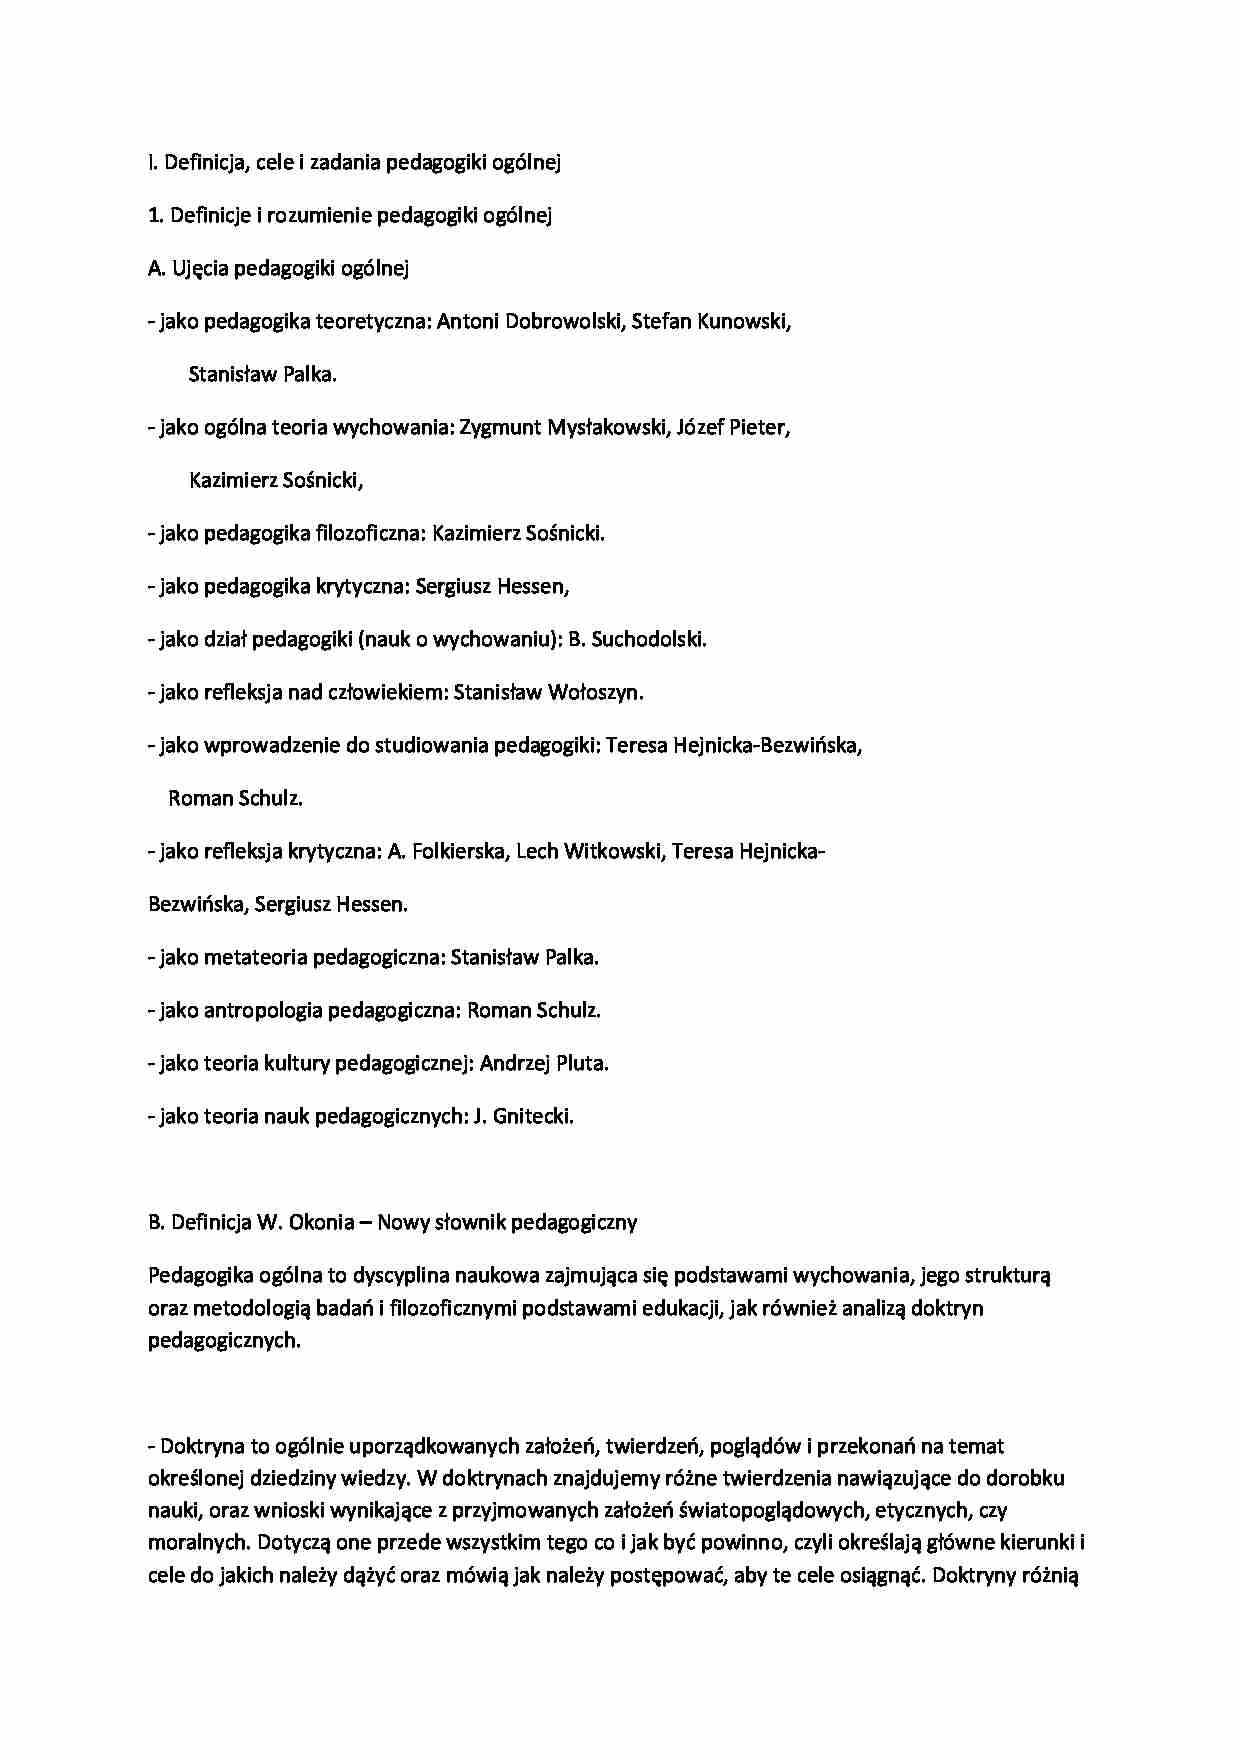 Cele i zadania pedagogiki  - strona 1